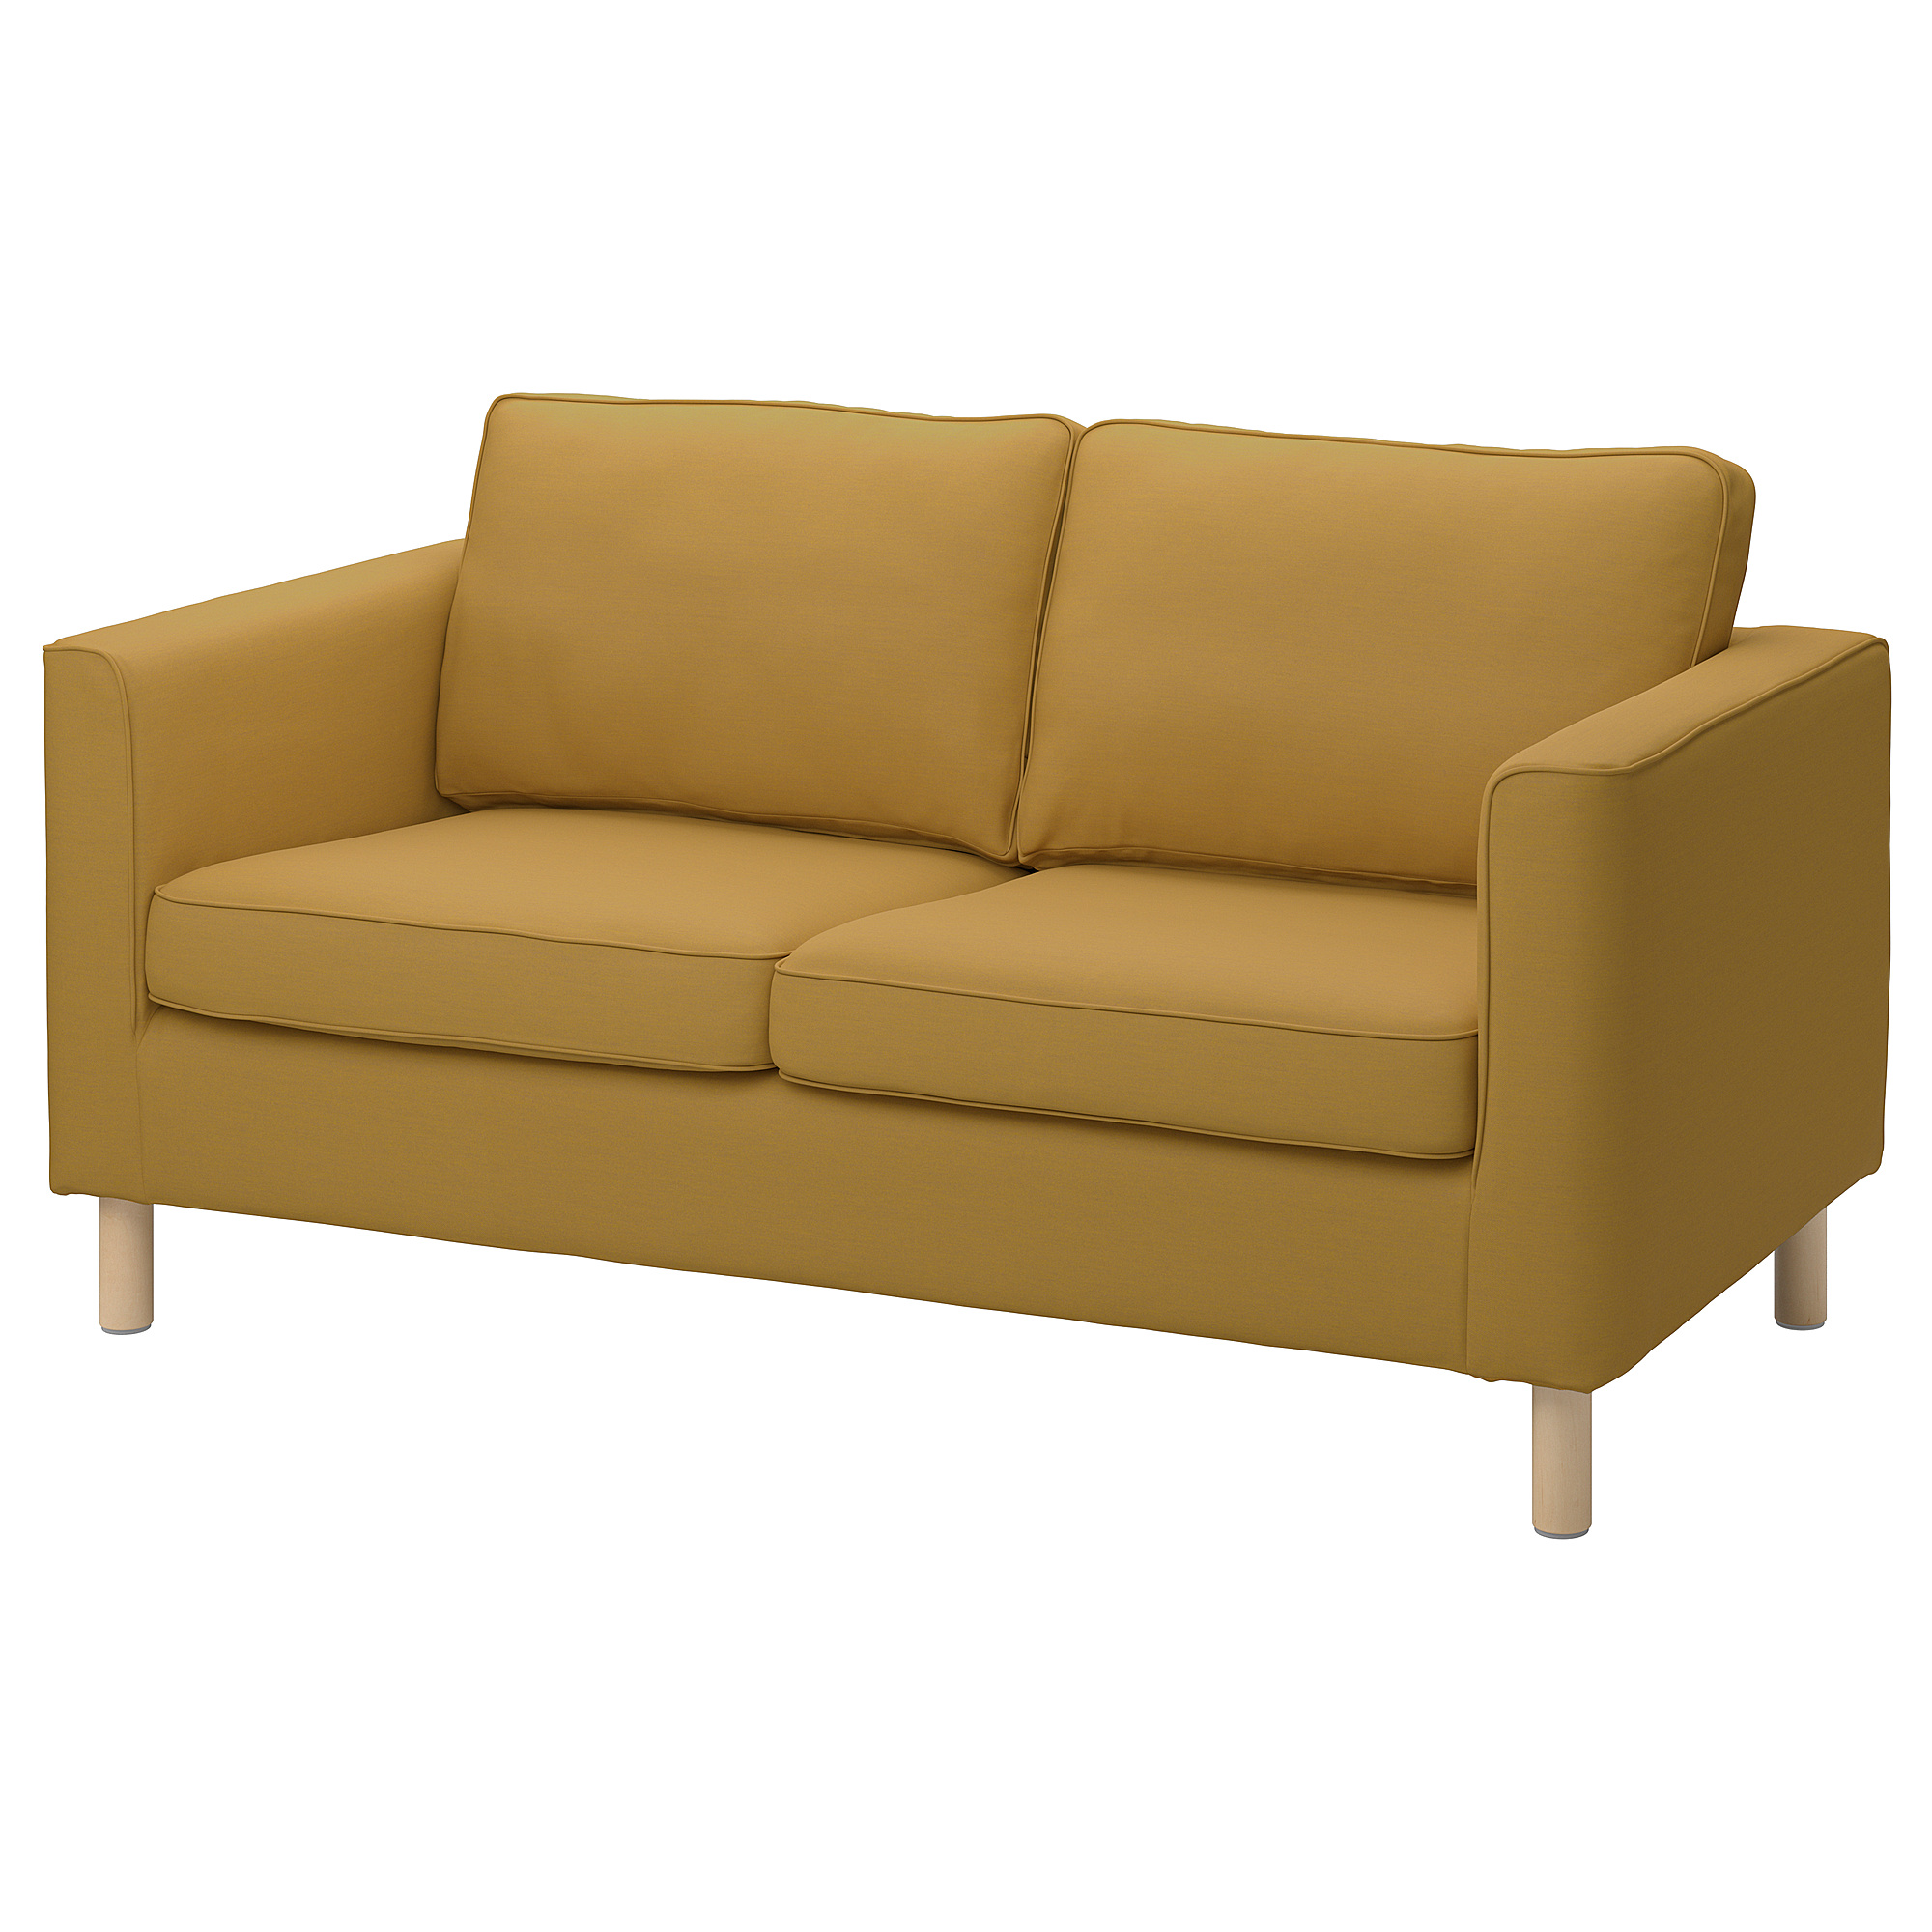 PÄRUP 2-seat sofa